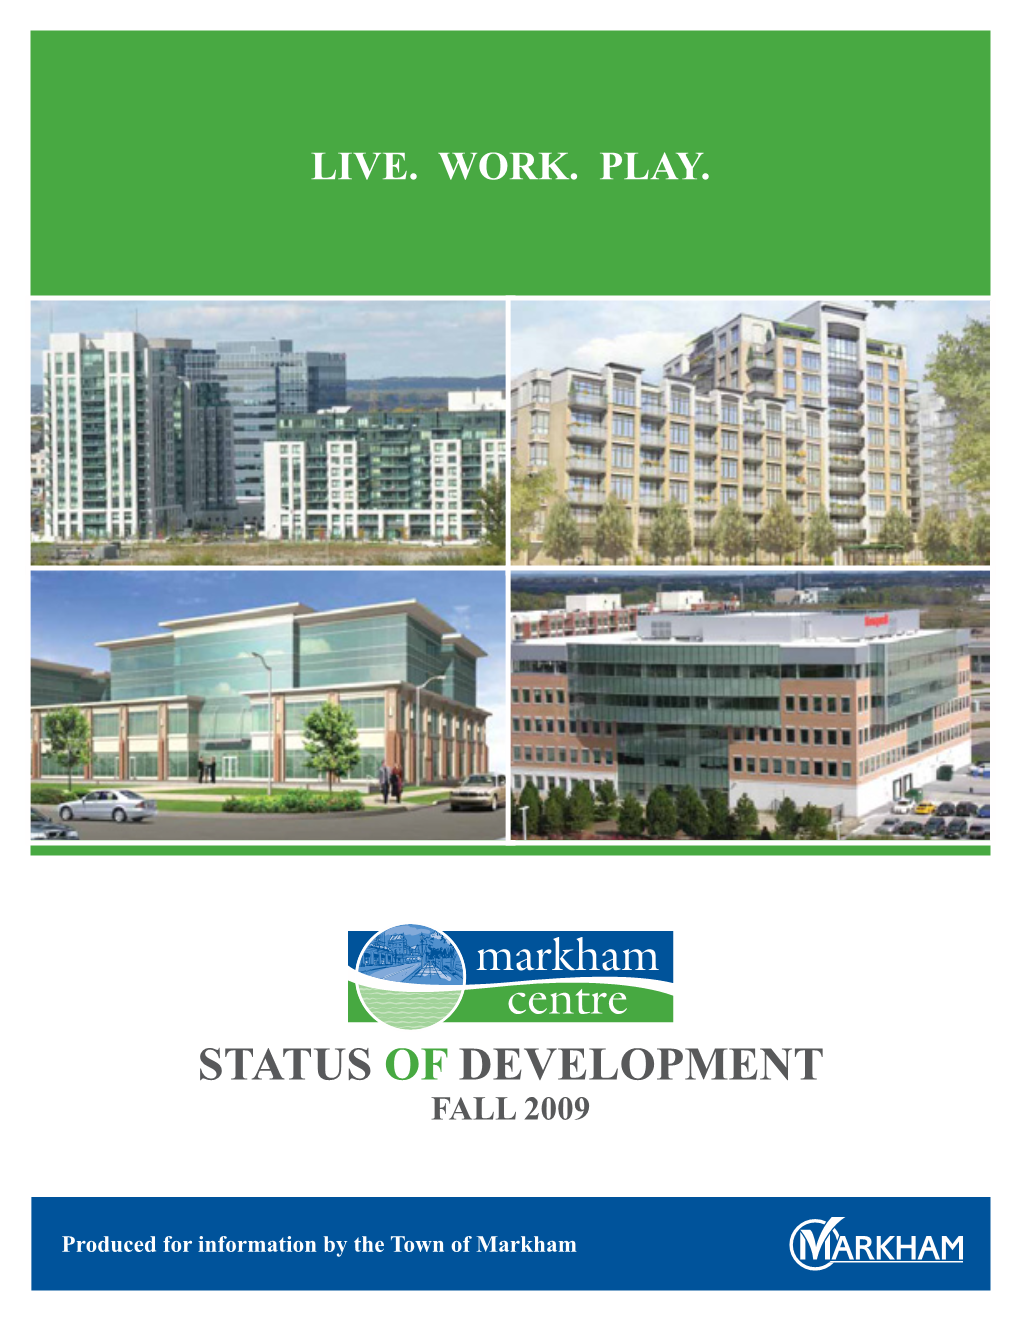 Markham Centre Status of Development